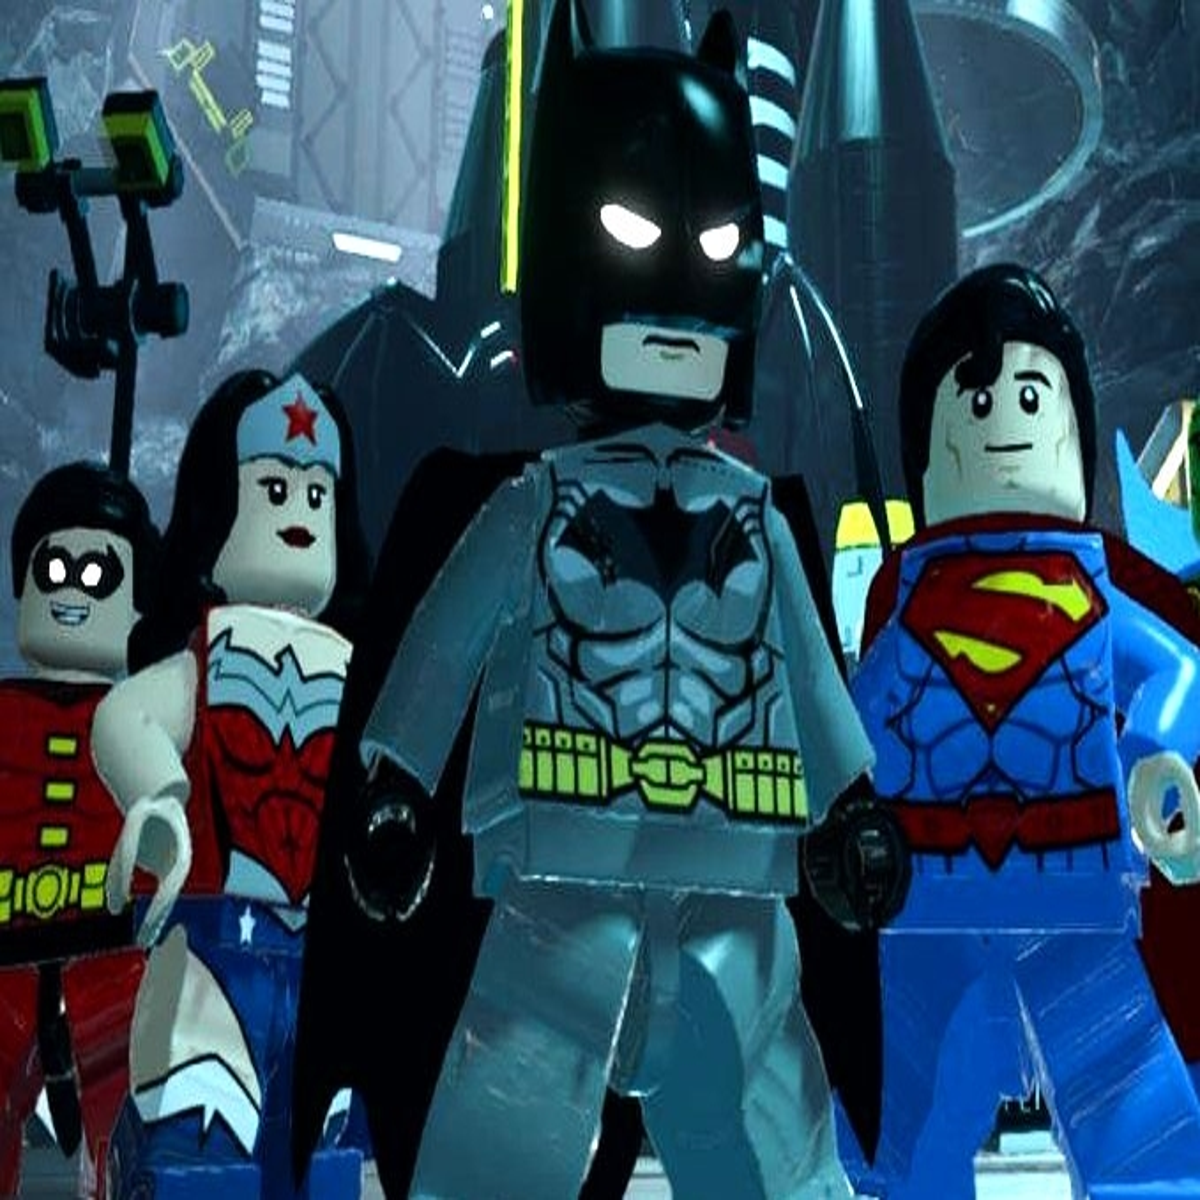 LEGO Batman 3: Beyond Gotham Reviews - OpenCritic